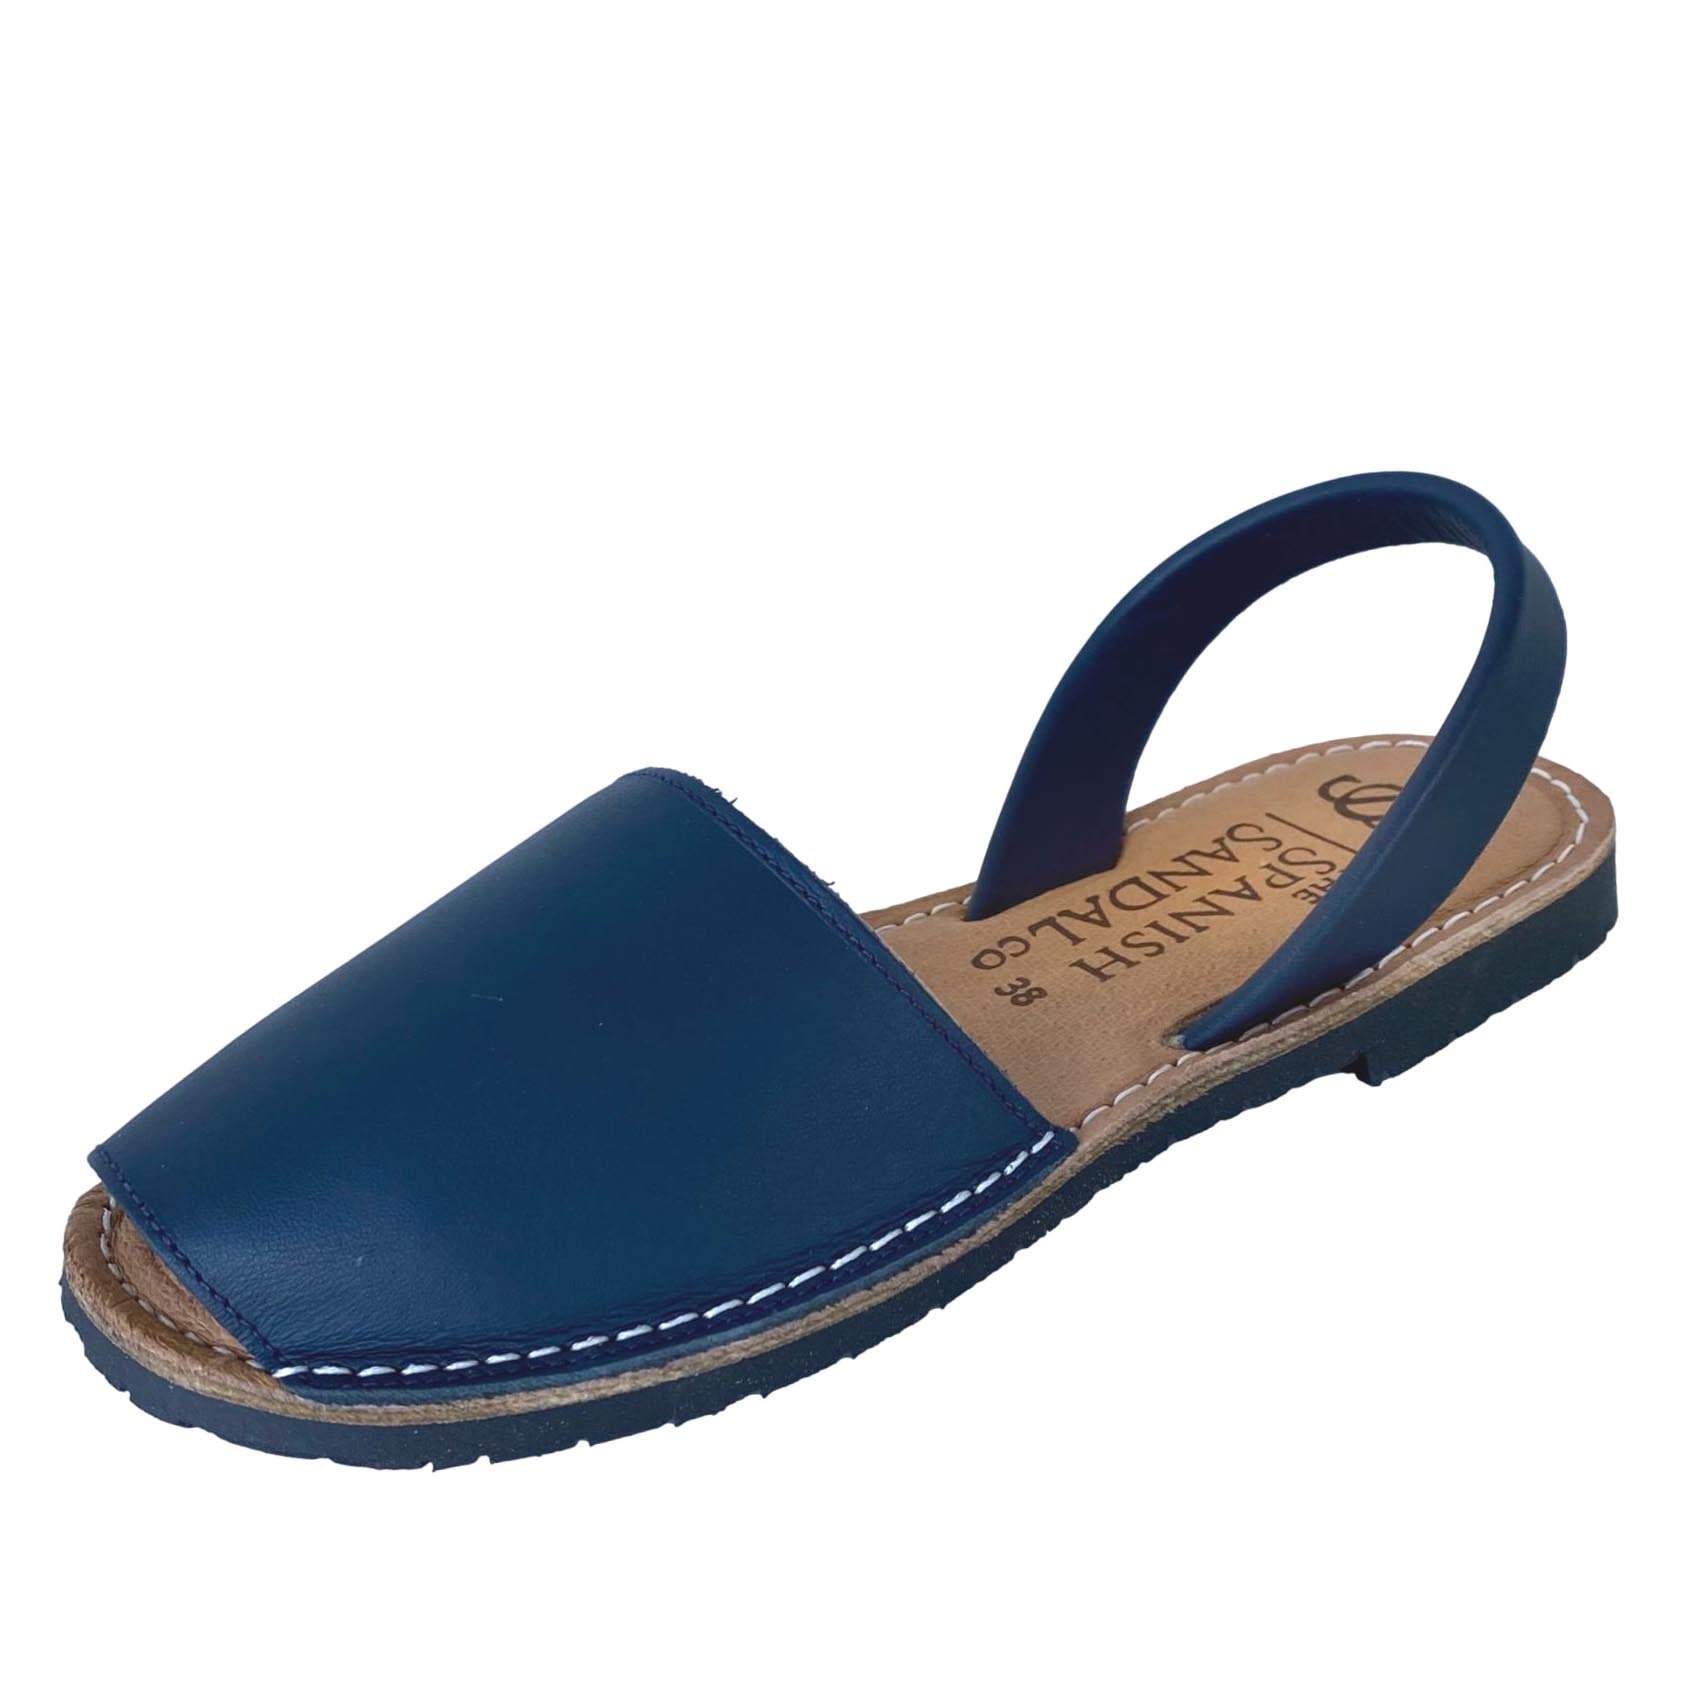 Navy blue sandals